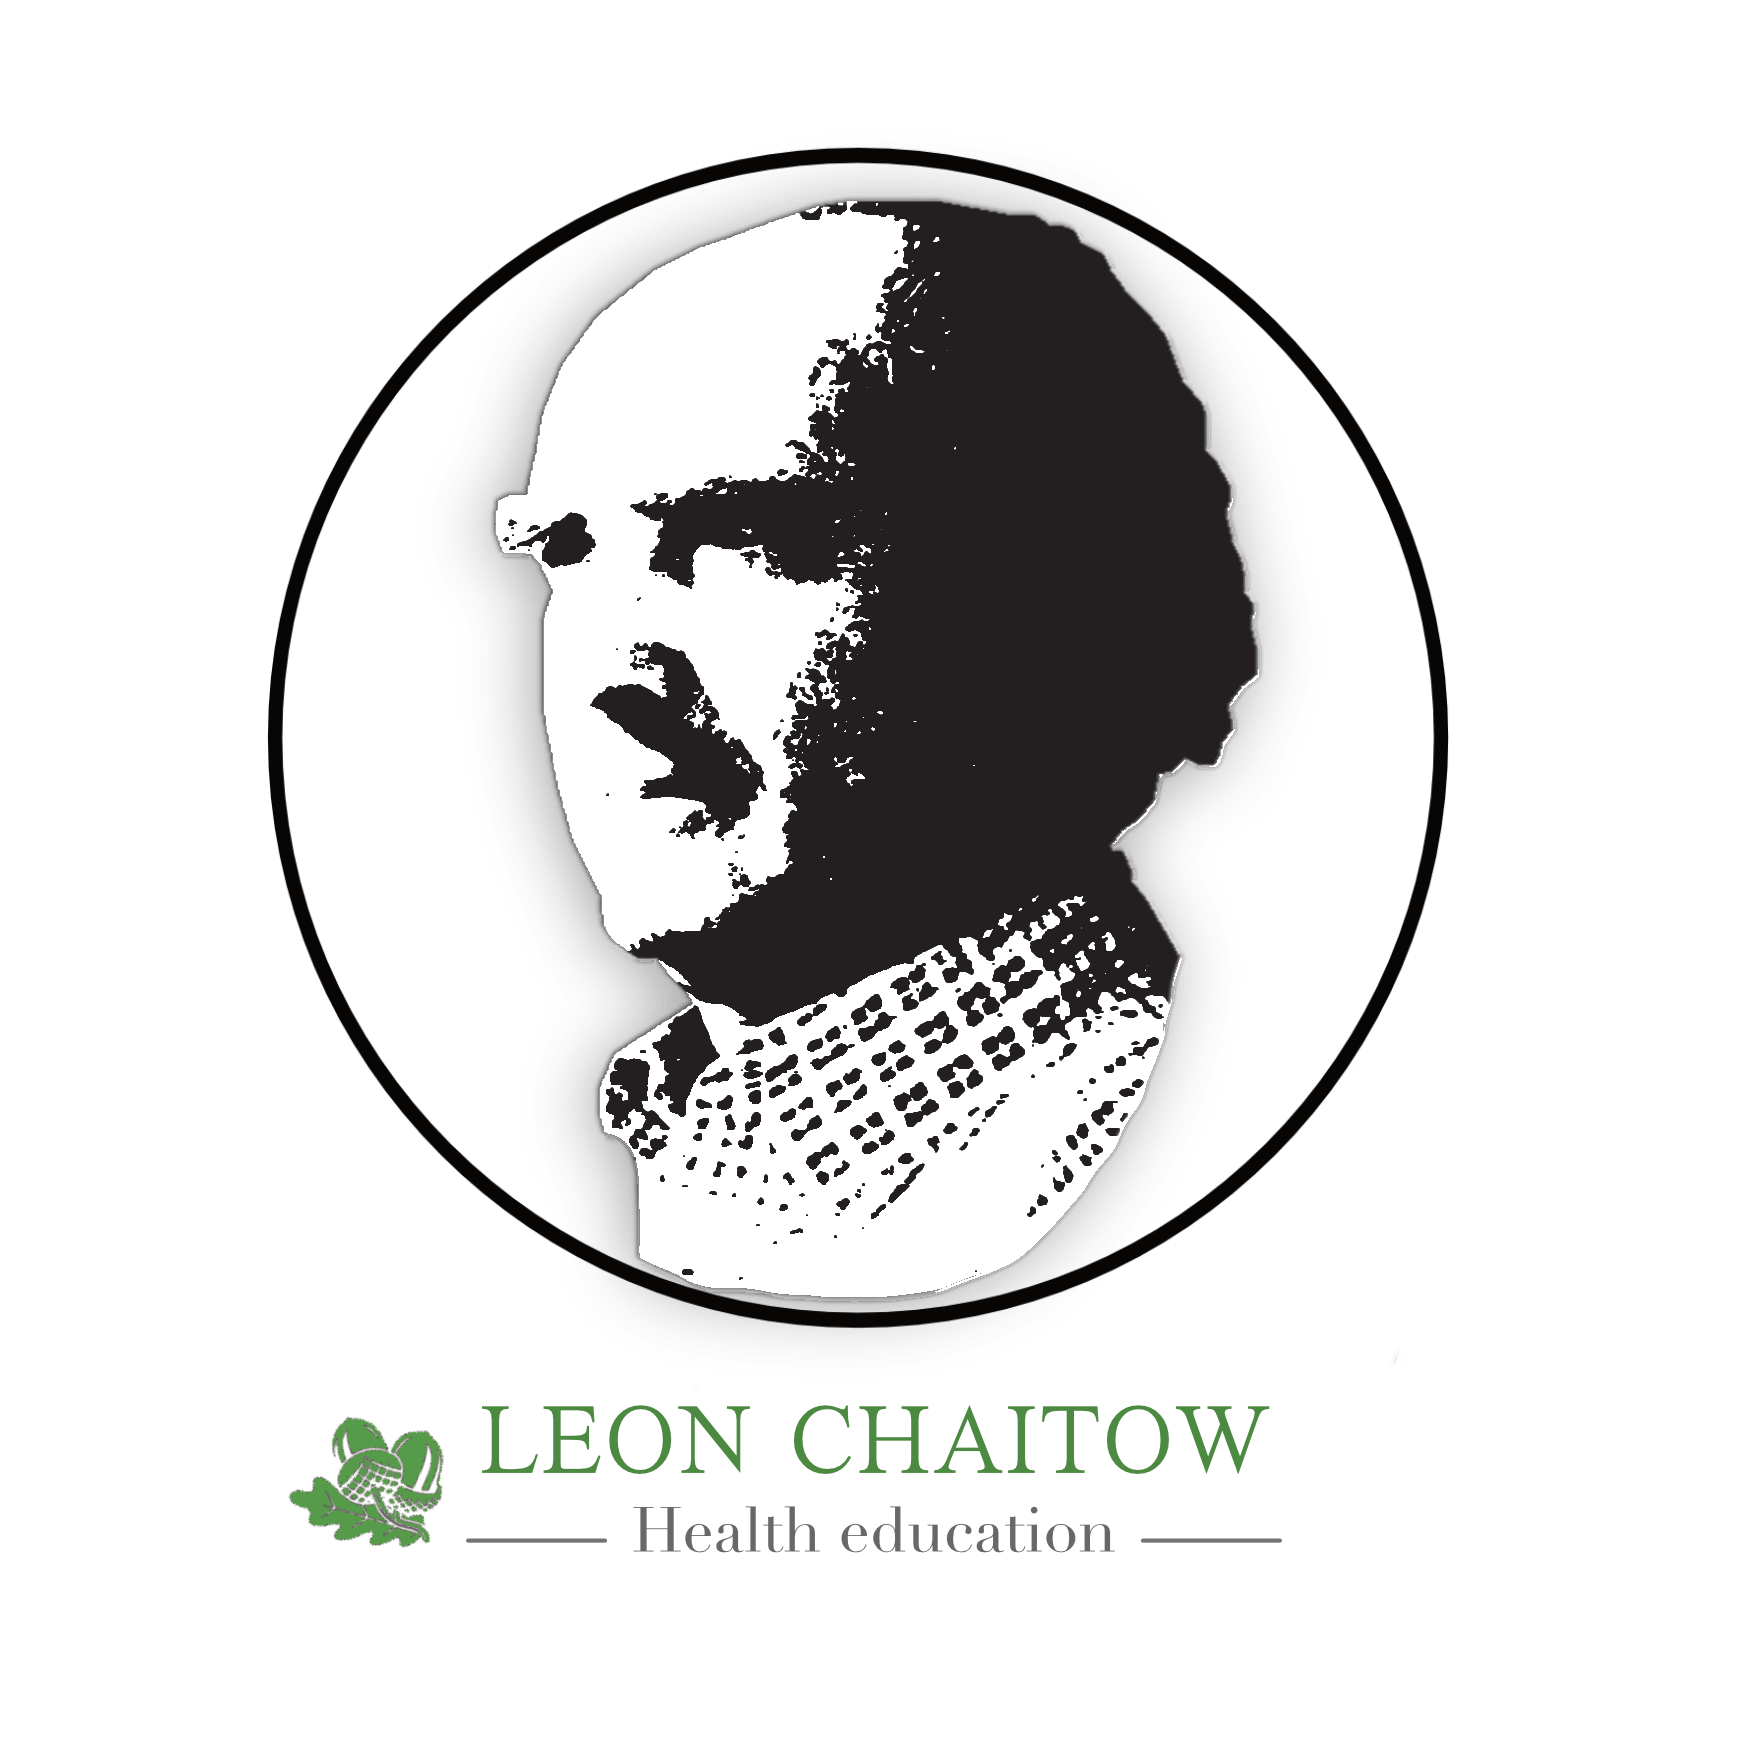 Leon Chaitow